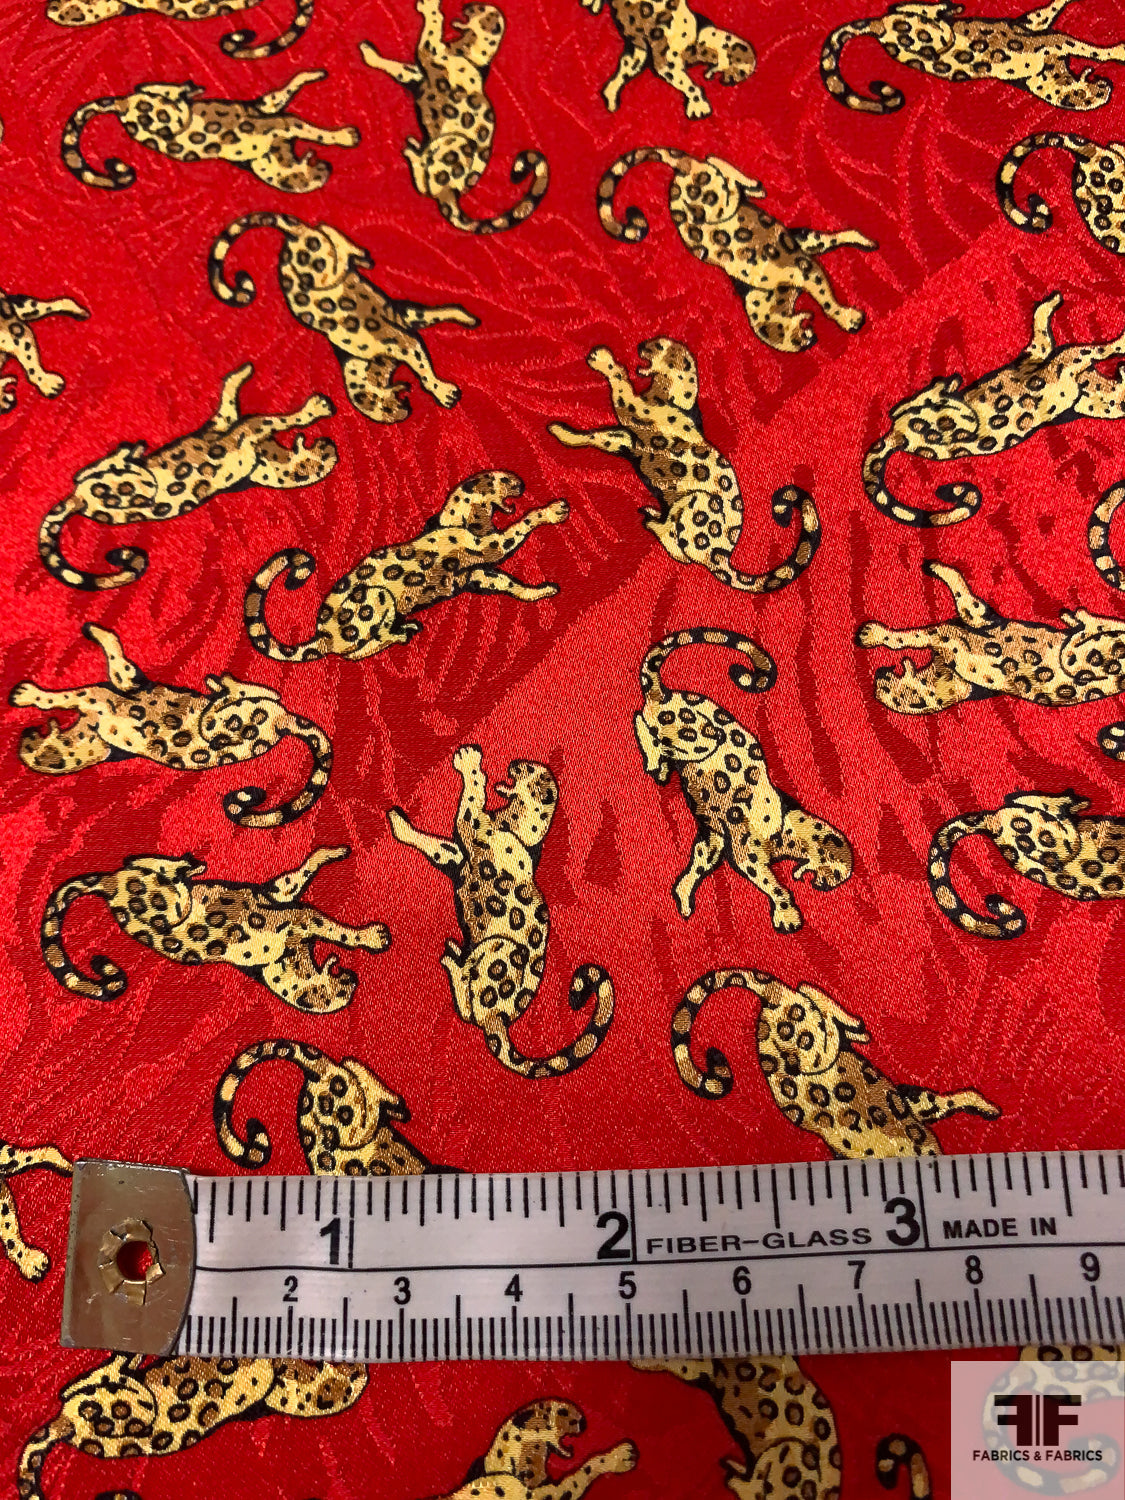 Cheetahs Printed on Silk Charmeuse Jacquard Panel - Vibrant Red / Caramel / Yellow / Black